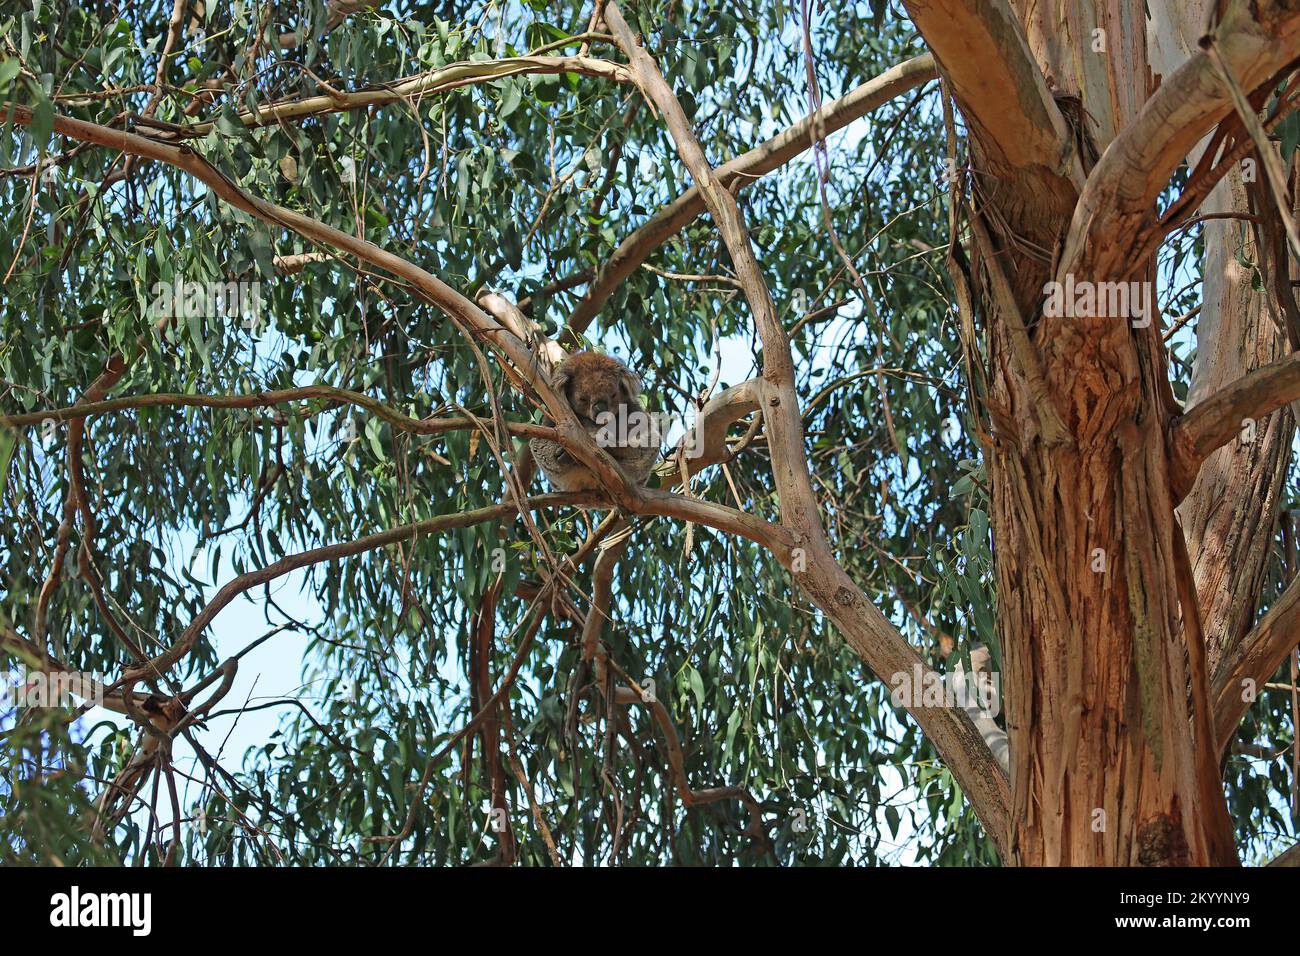 Eucalyptus tree with sleeping Koala - Australia Stock Photo